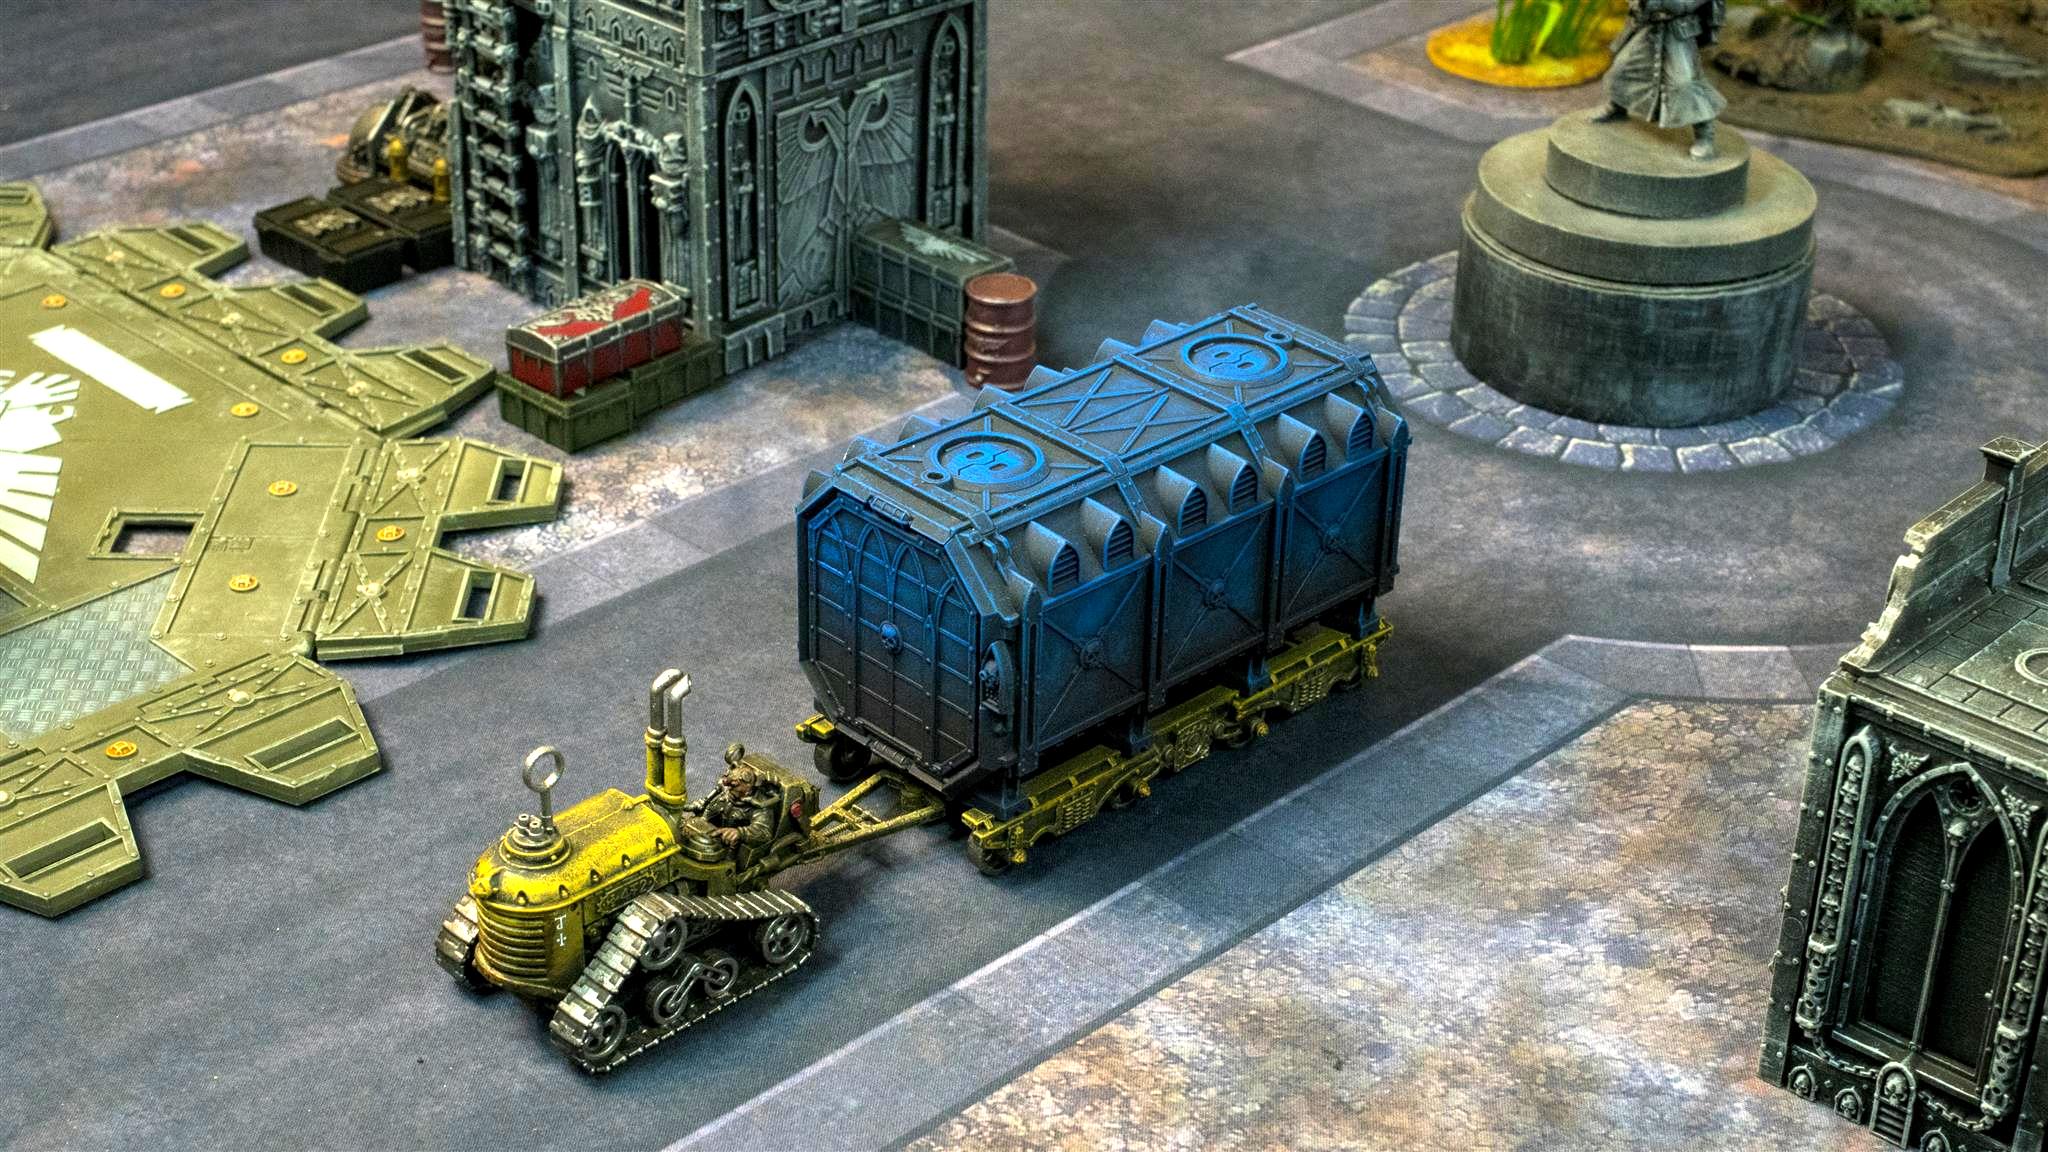 40k Terrain, Armored Container, Terrain, Warhammer 40k Terrain